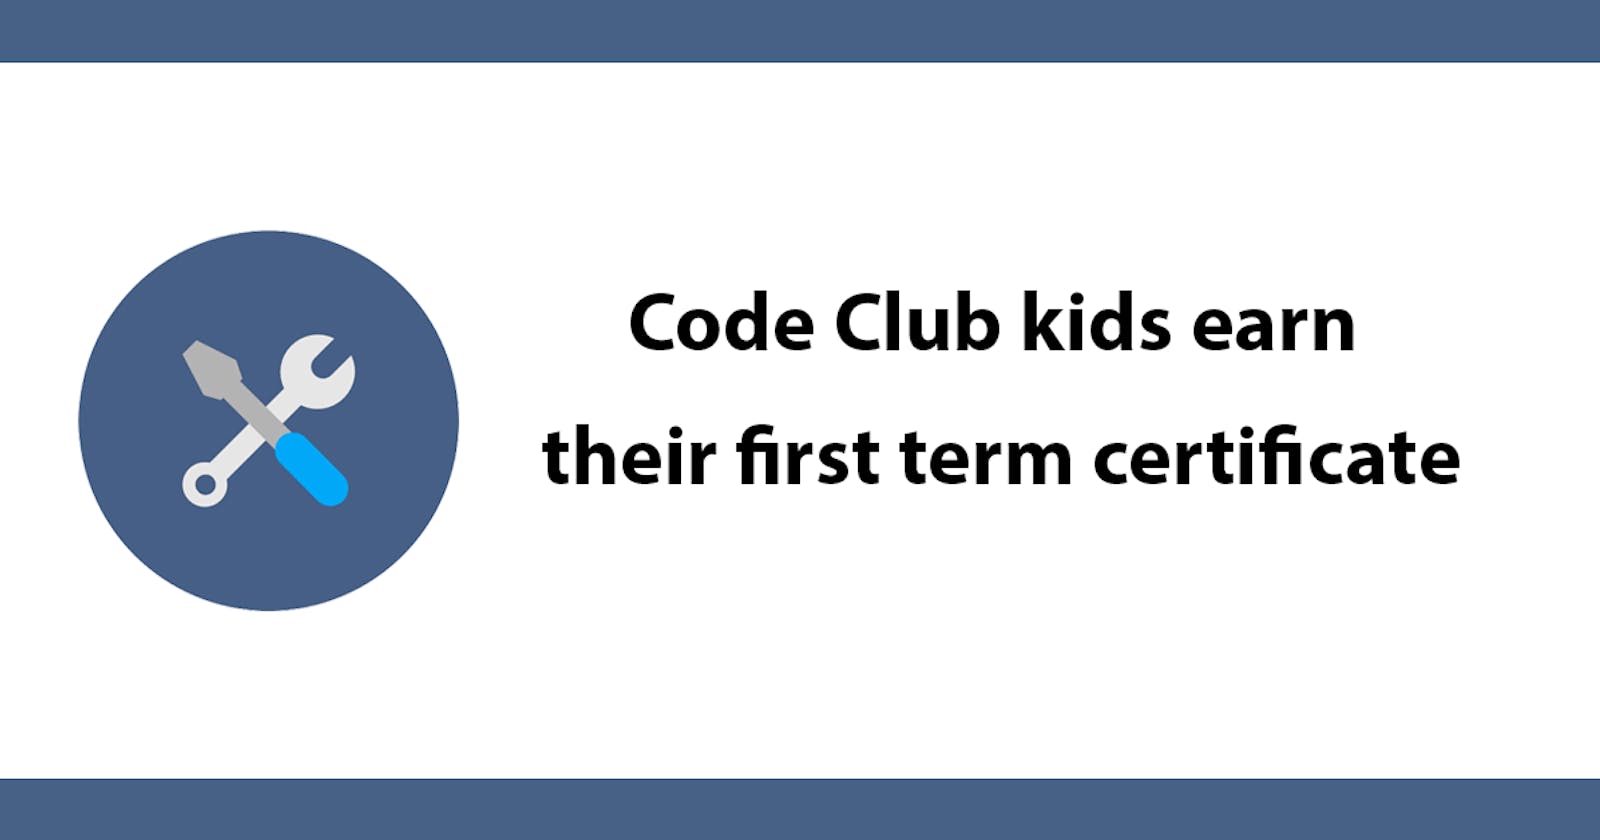 Code Club kids earn their first term certificate